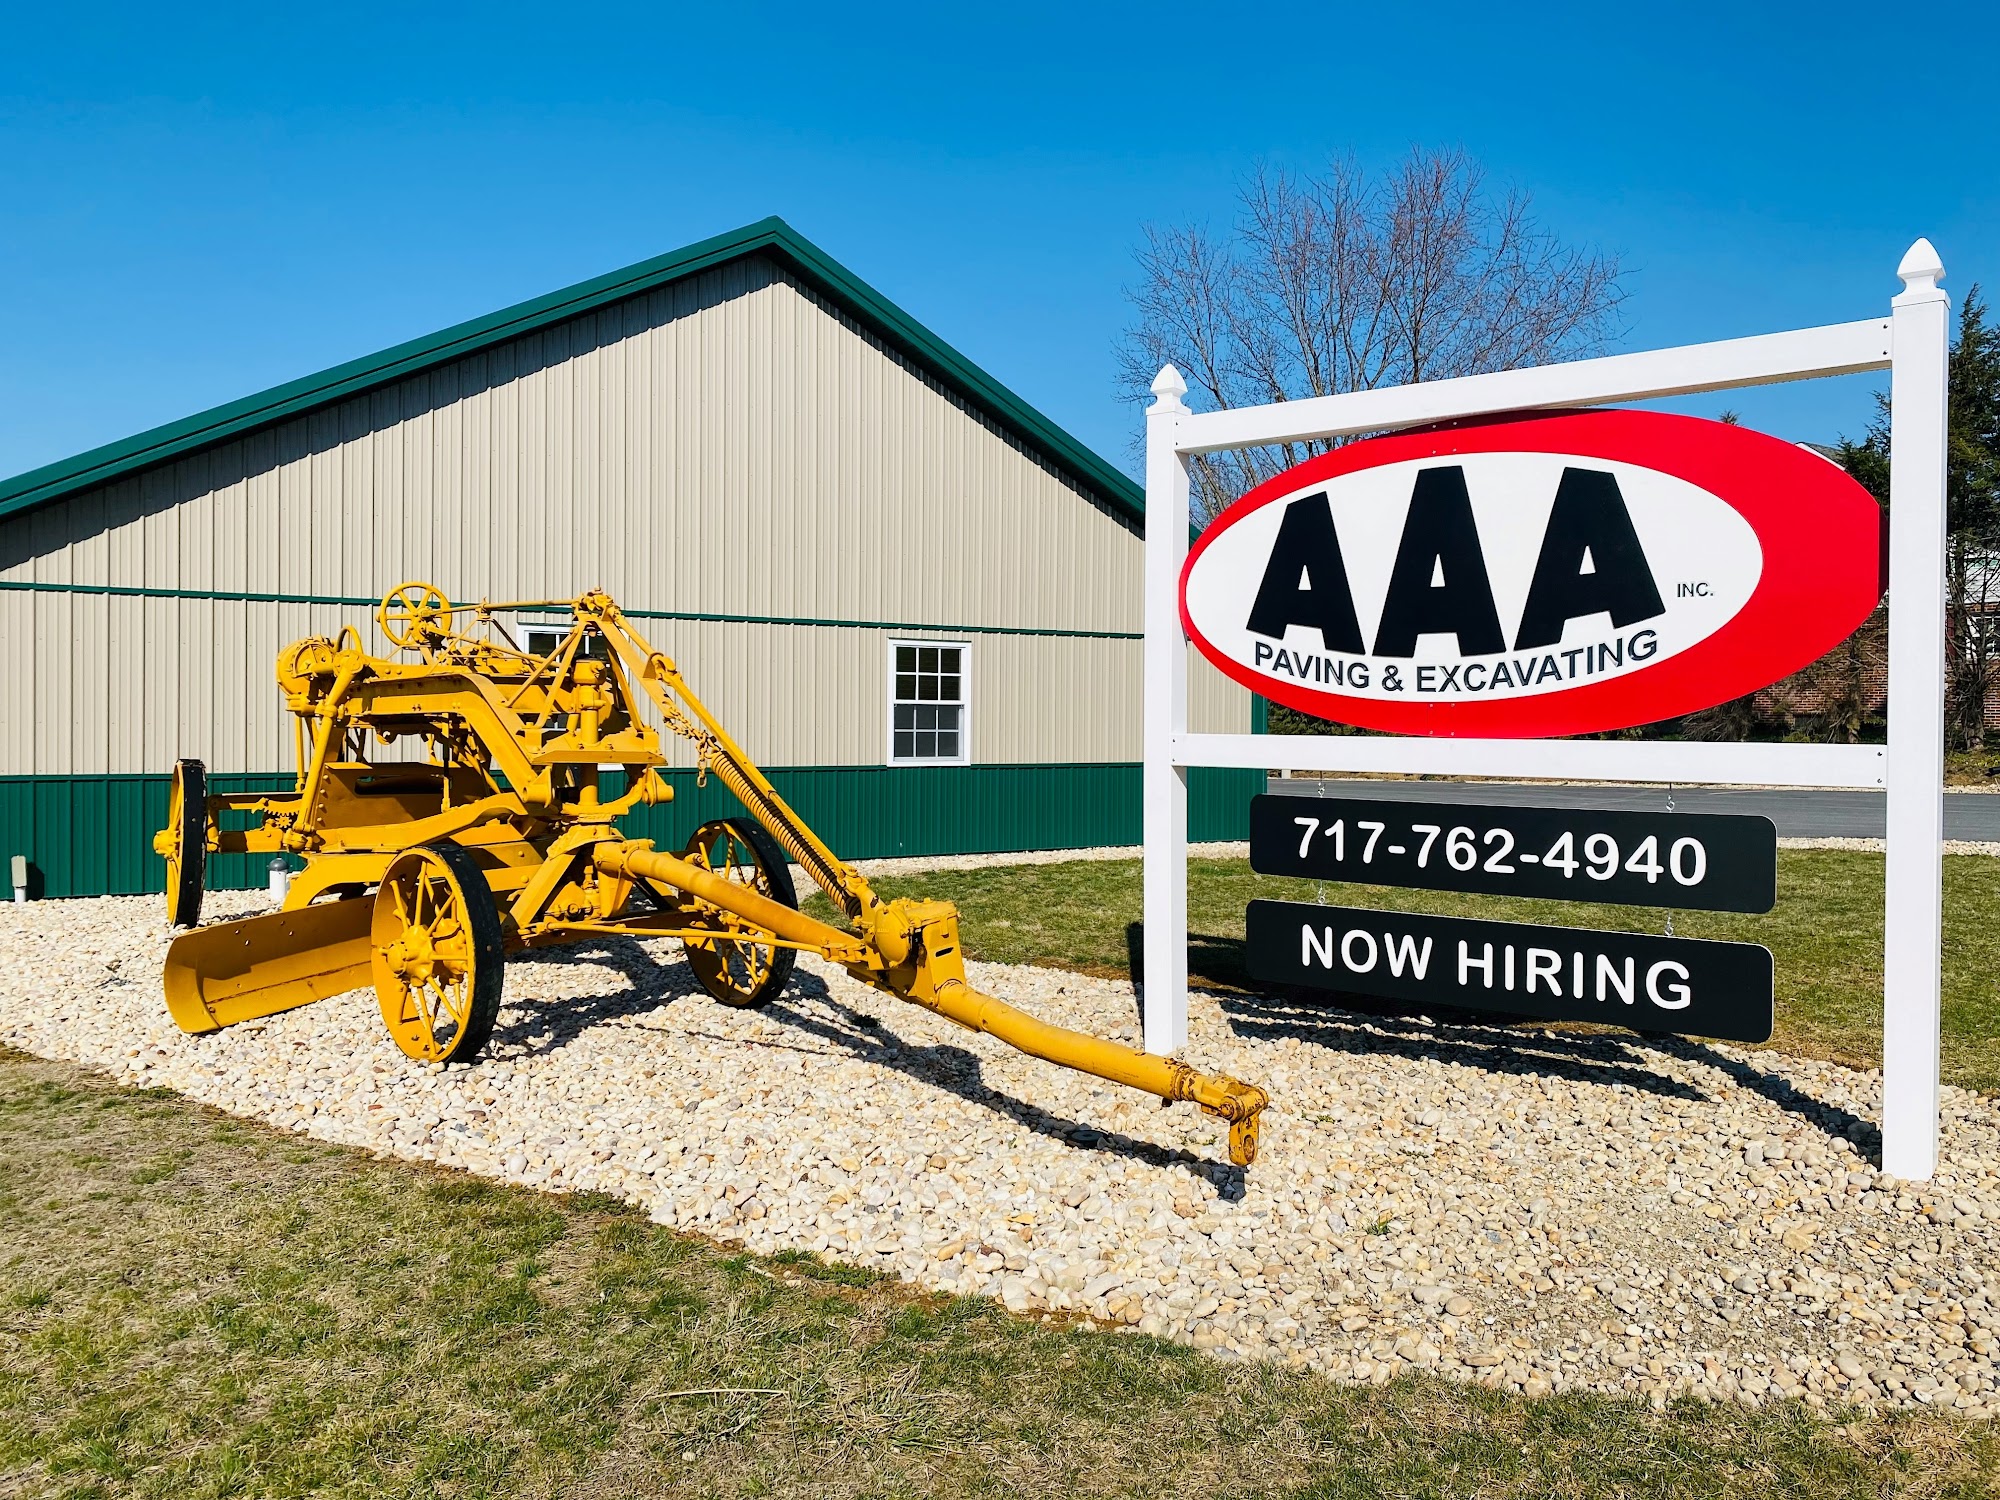 AAA Paving & Excavating Inc